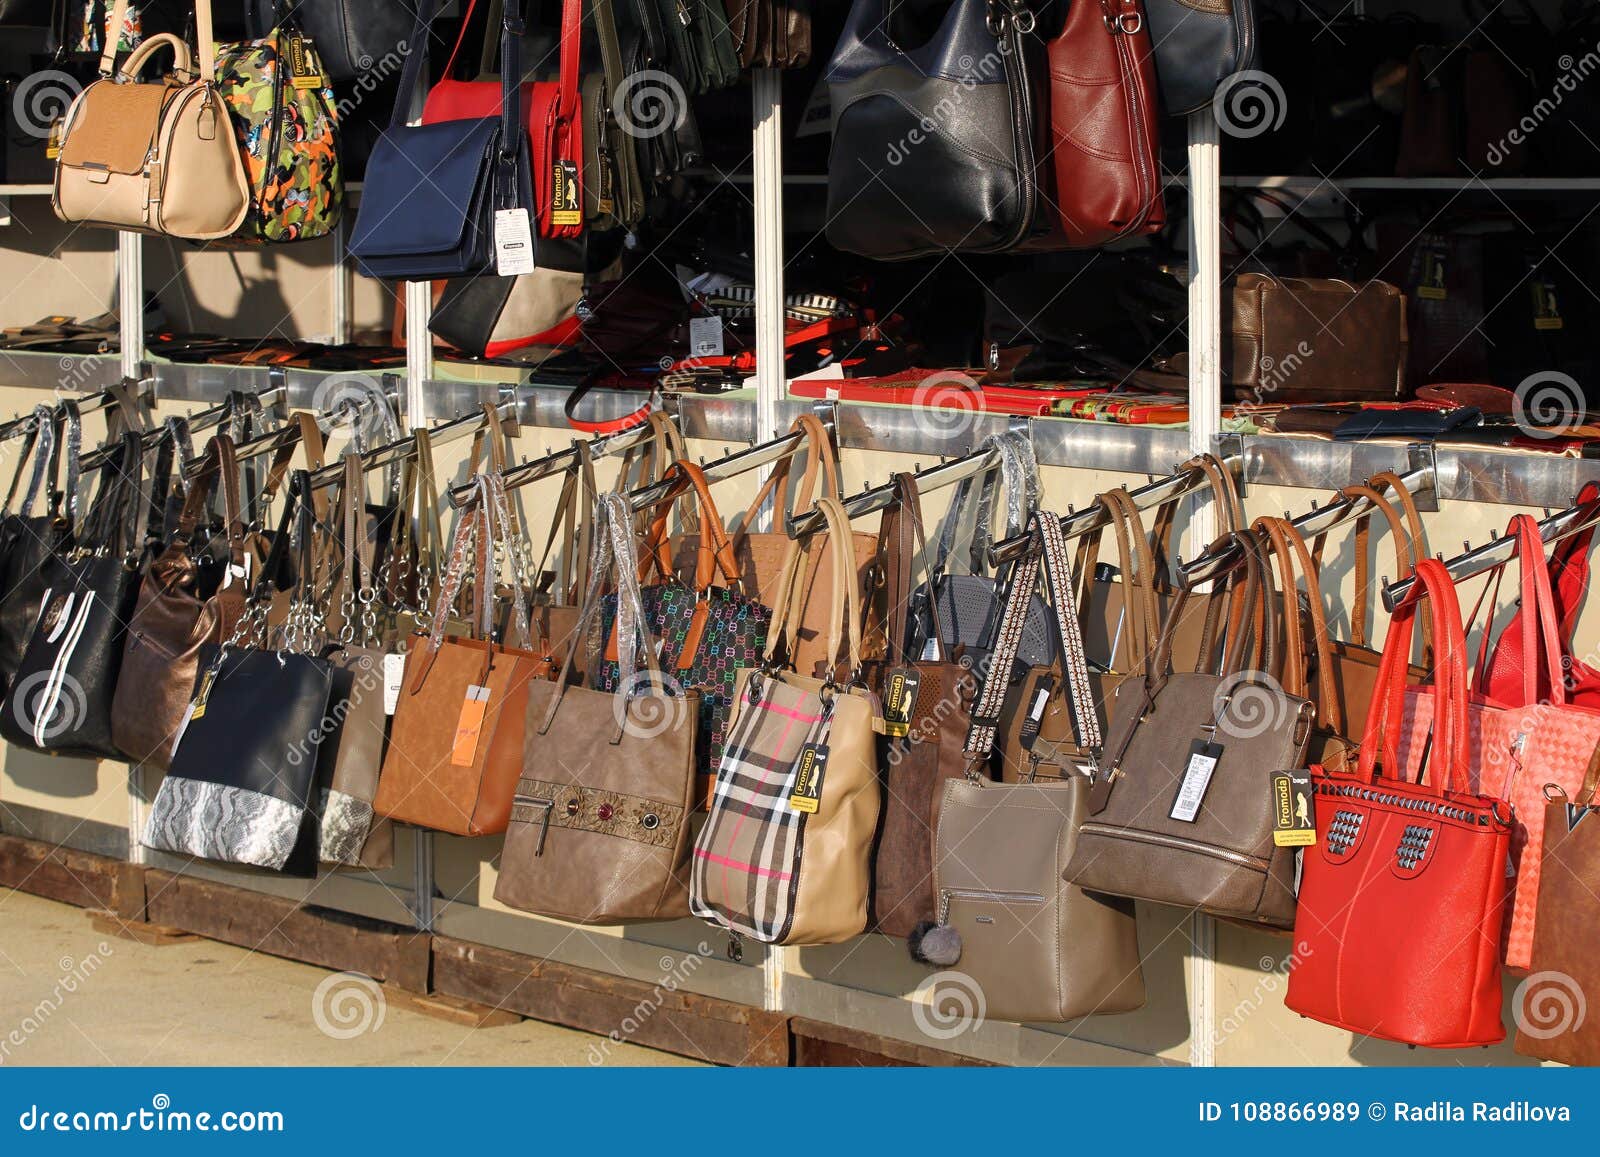 shopping women bags,imitation handbags,shopping of bags,jute handbag,